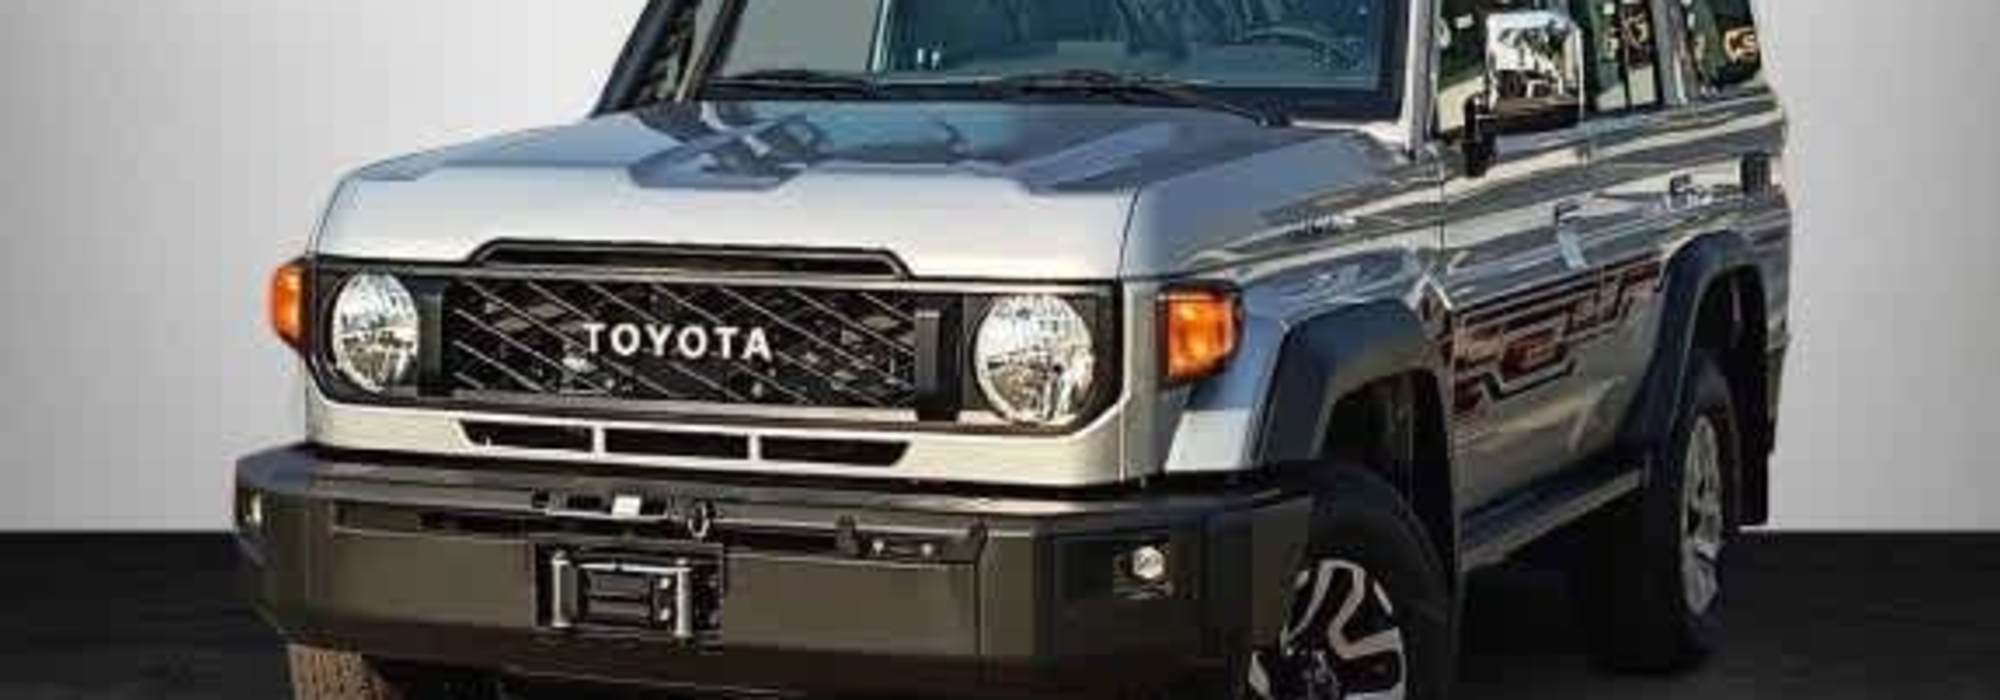 Toyota Land Cruiser from TradeX Auto